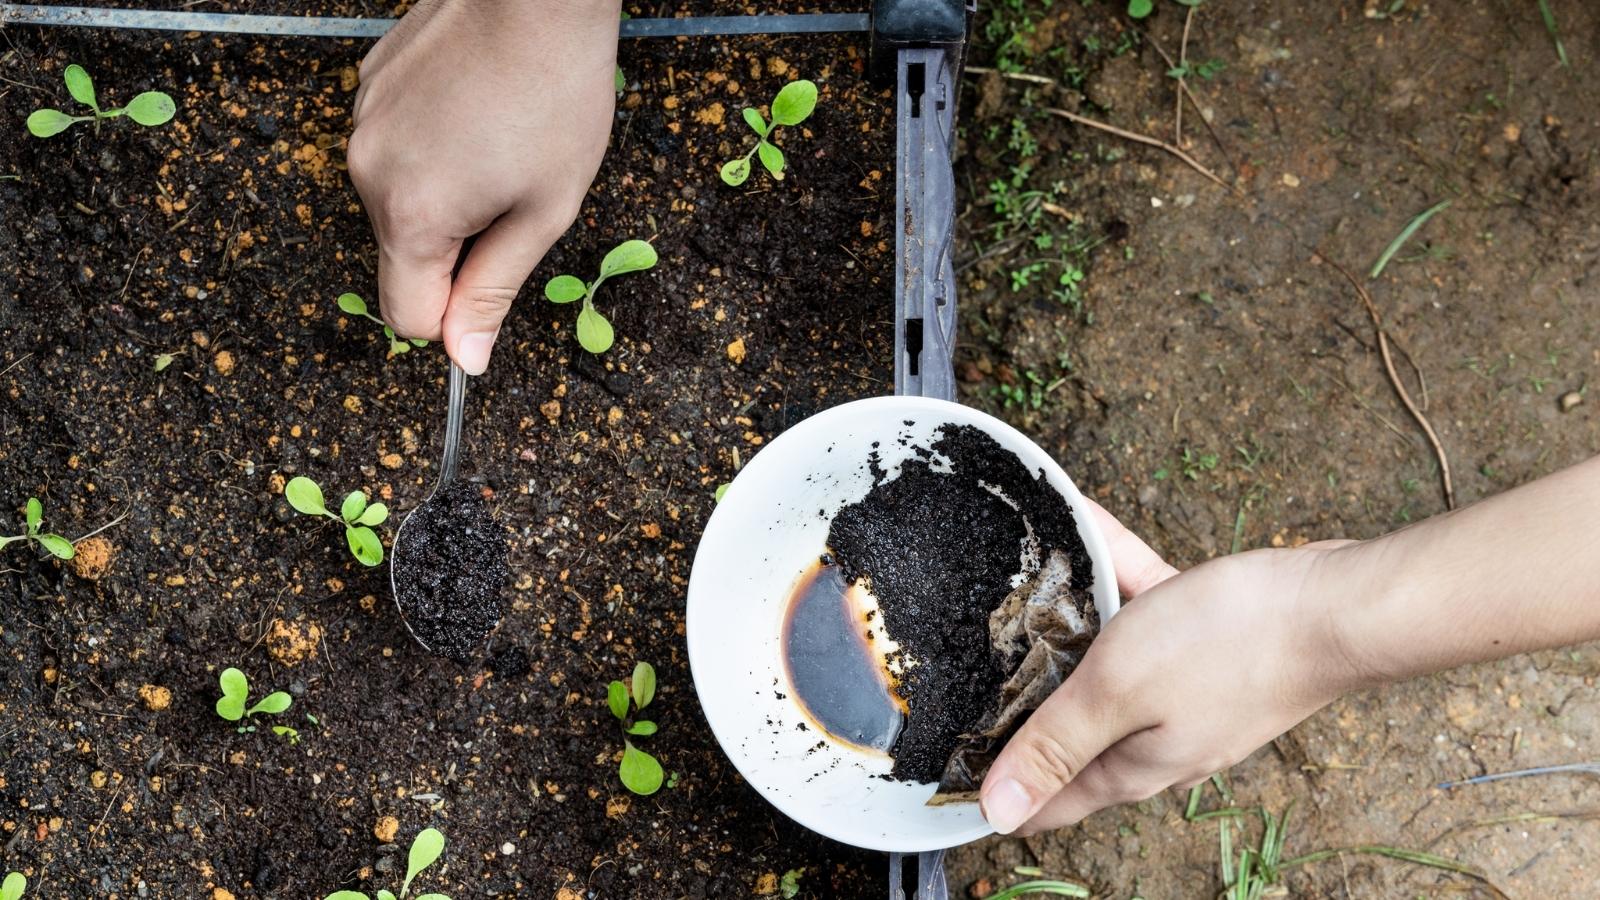 Gardener using spent coffee grounds as fertilizer in the garden